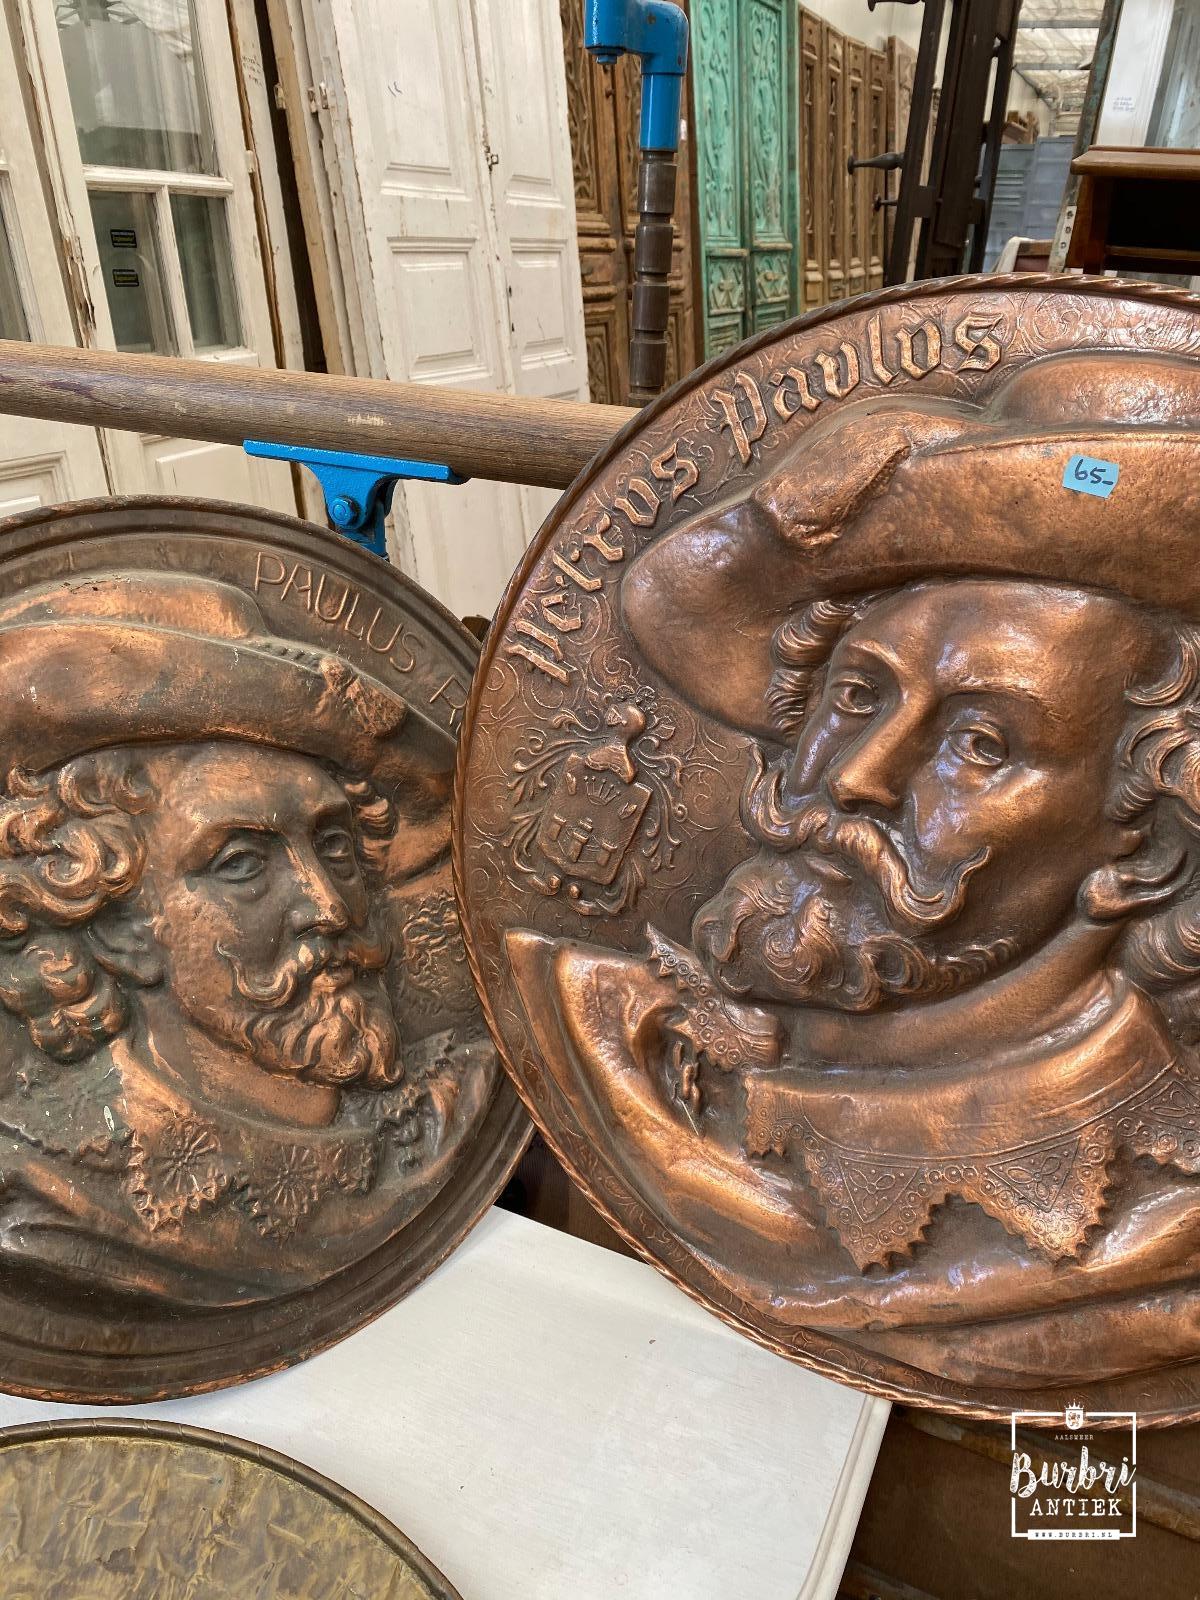 Kansen atoom Vouwen Antique Antique bronze plates - Thuis decoratie - Diverse decoratie - Burbri